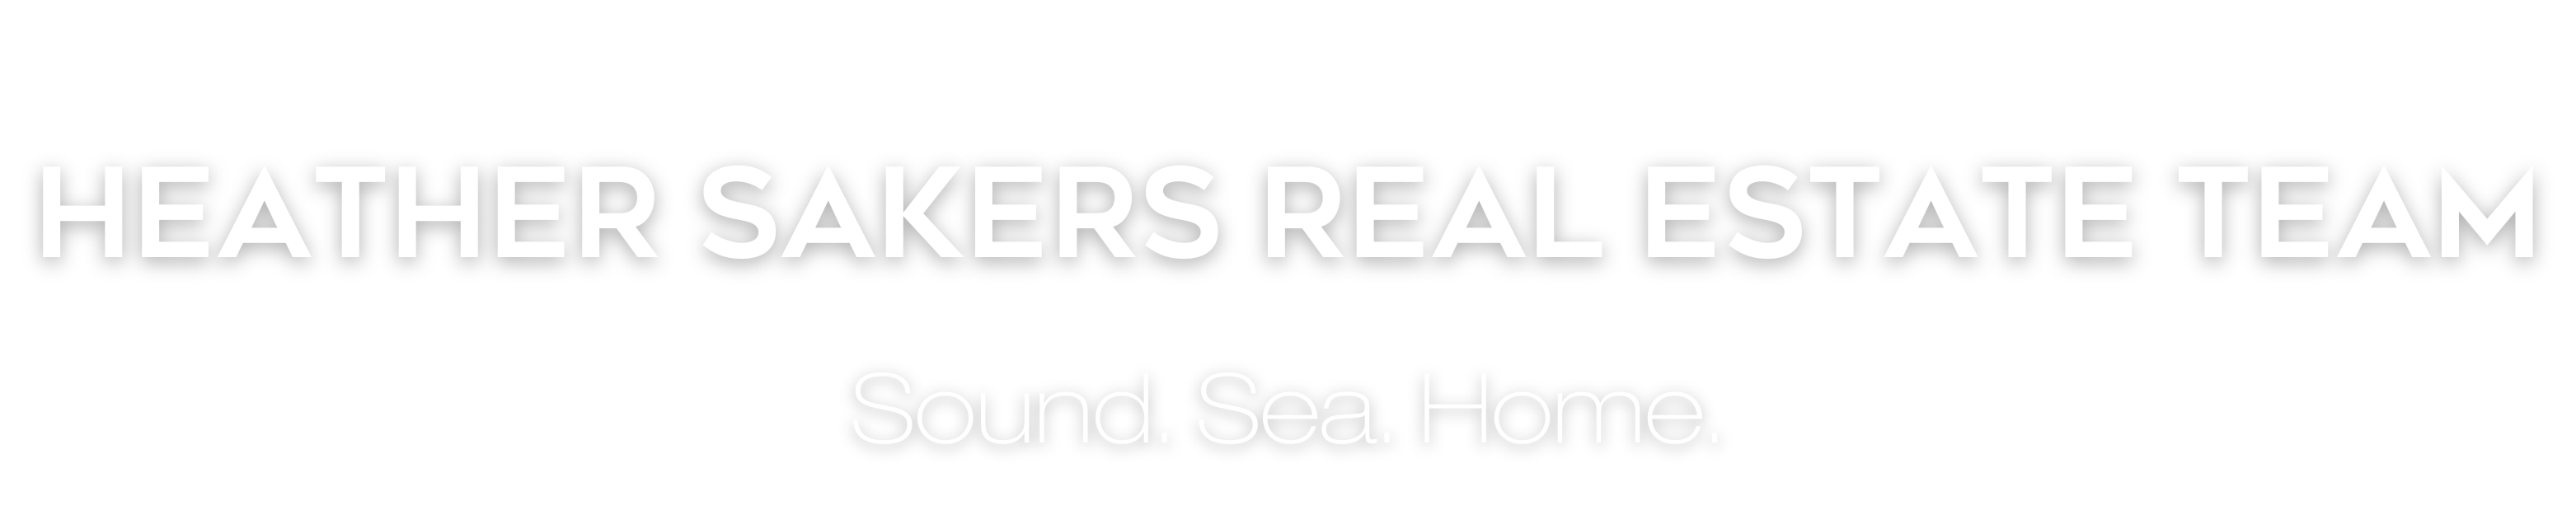 Heather Sakers Real Estate Team (5)